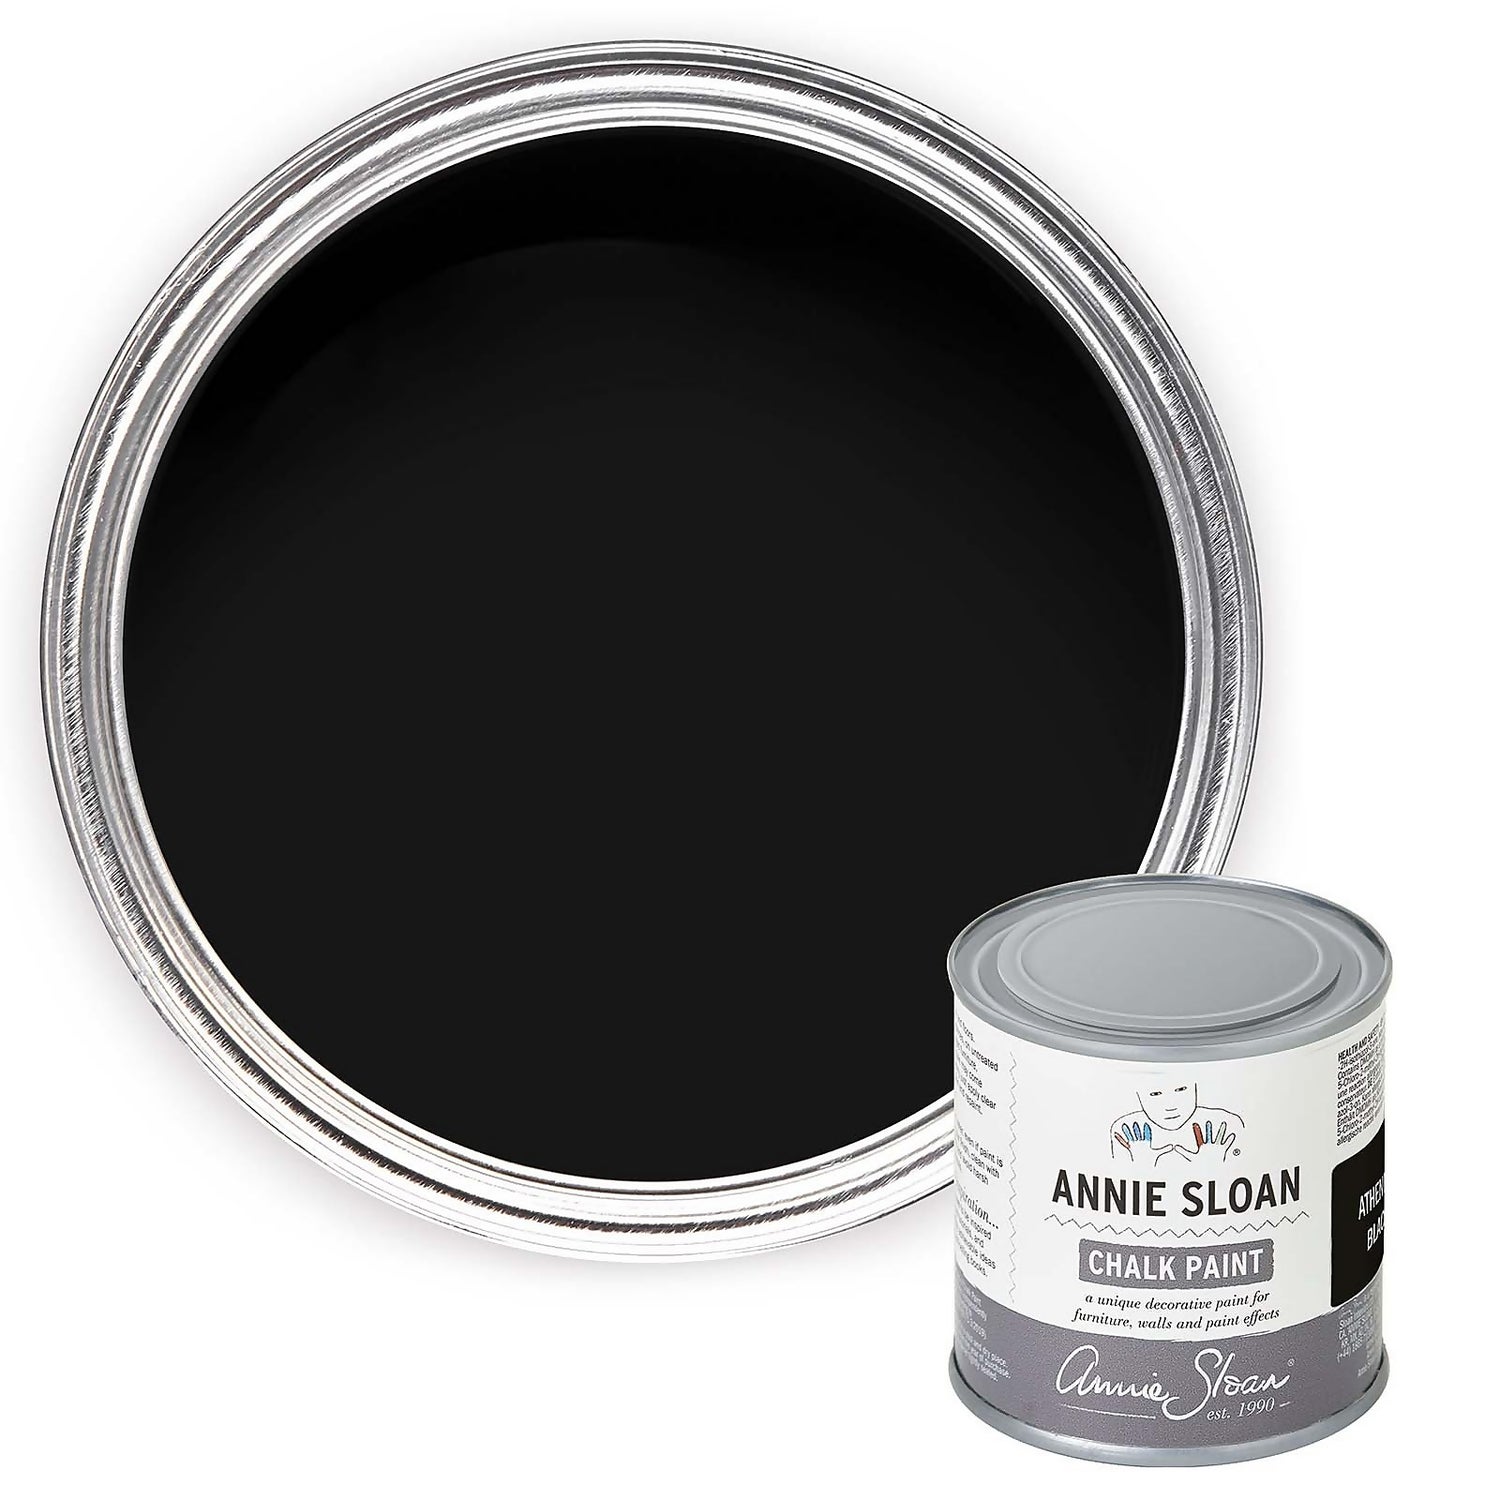 Athenian Black Chalk Paint®